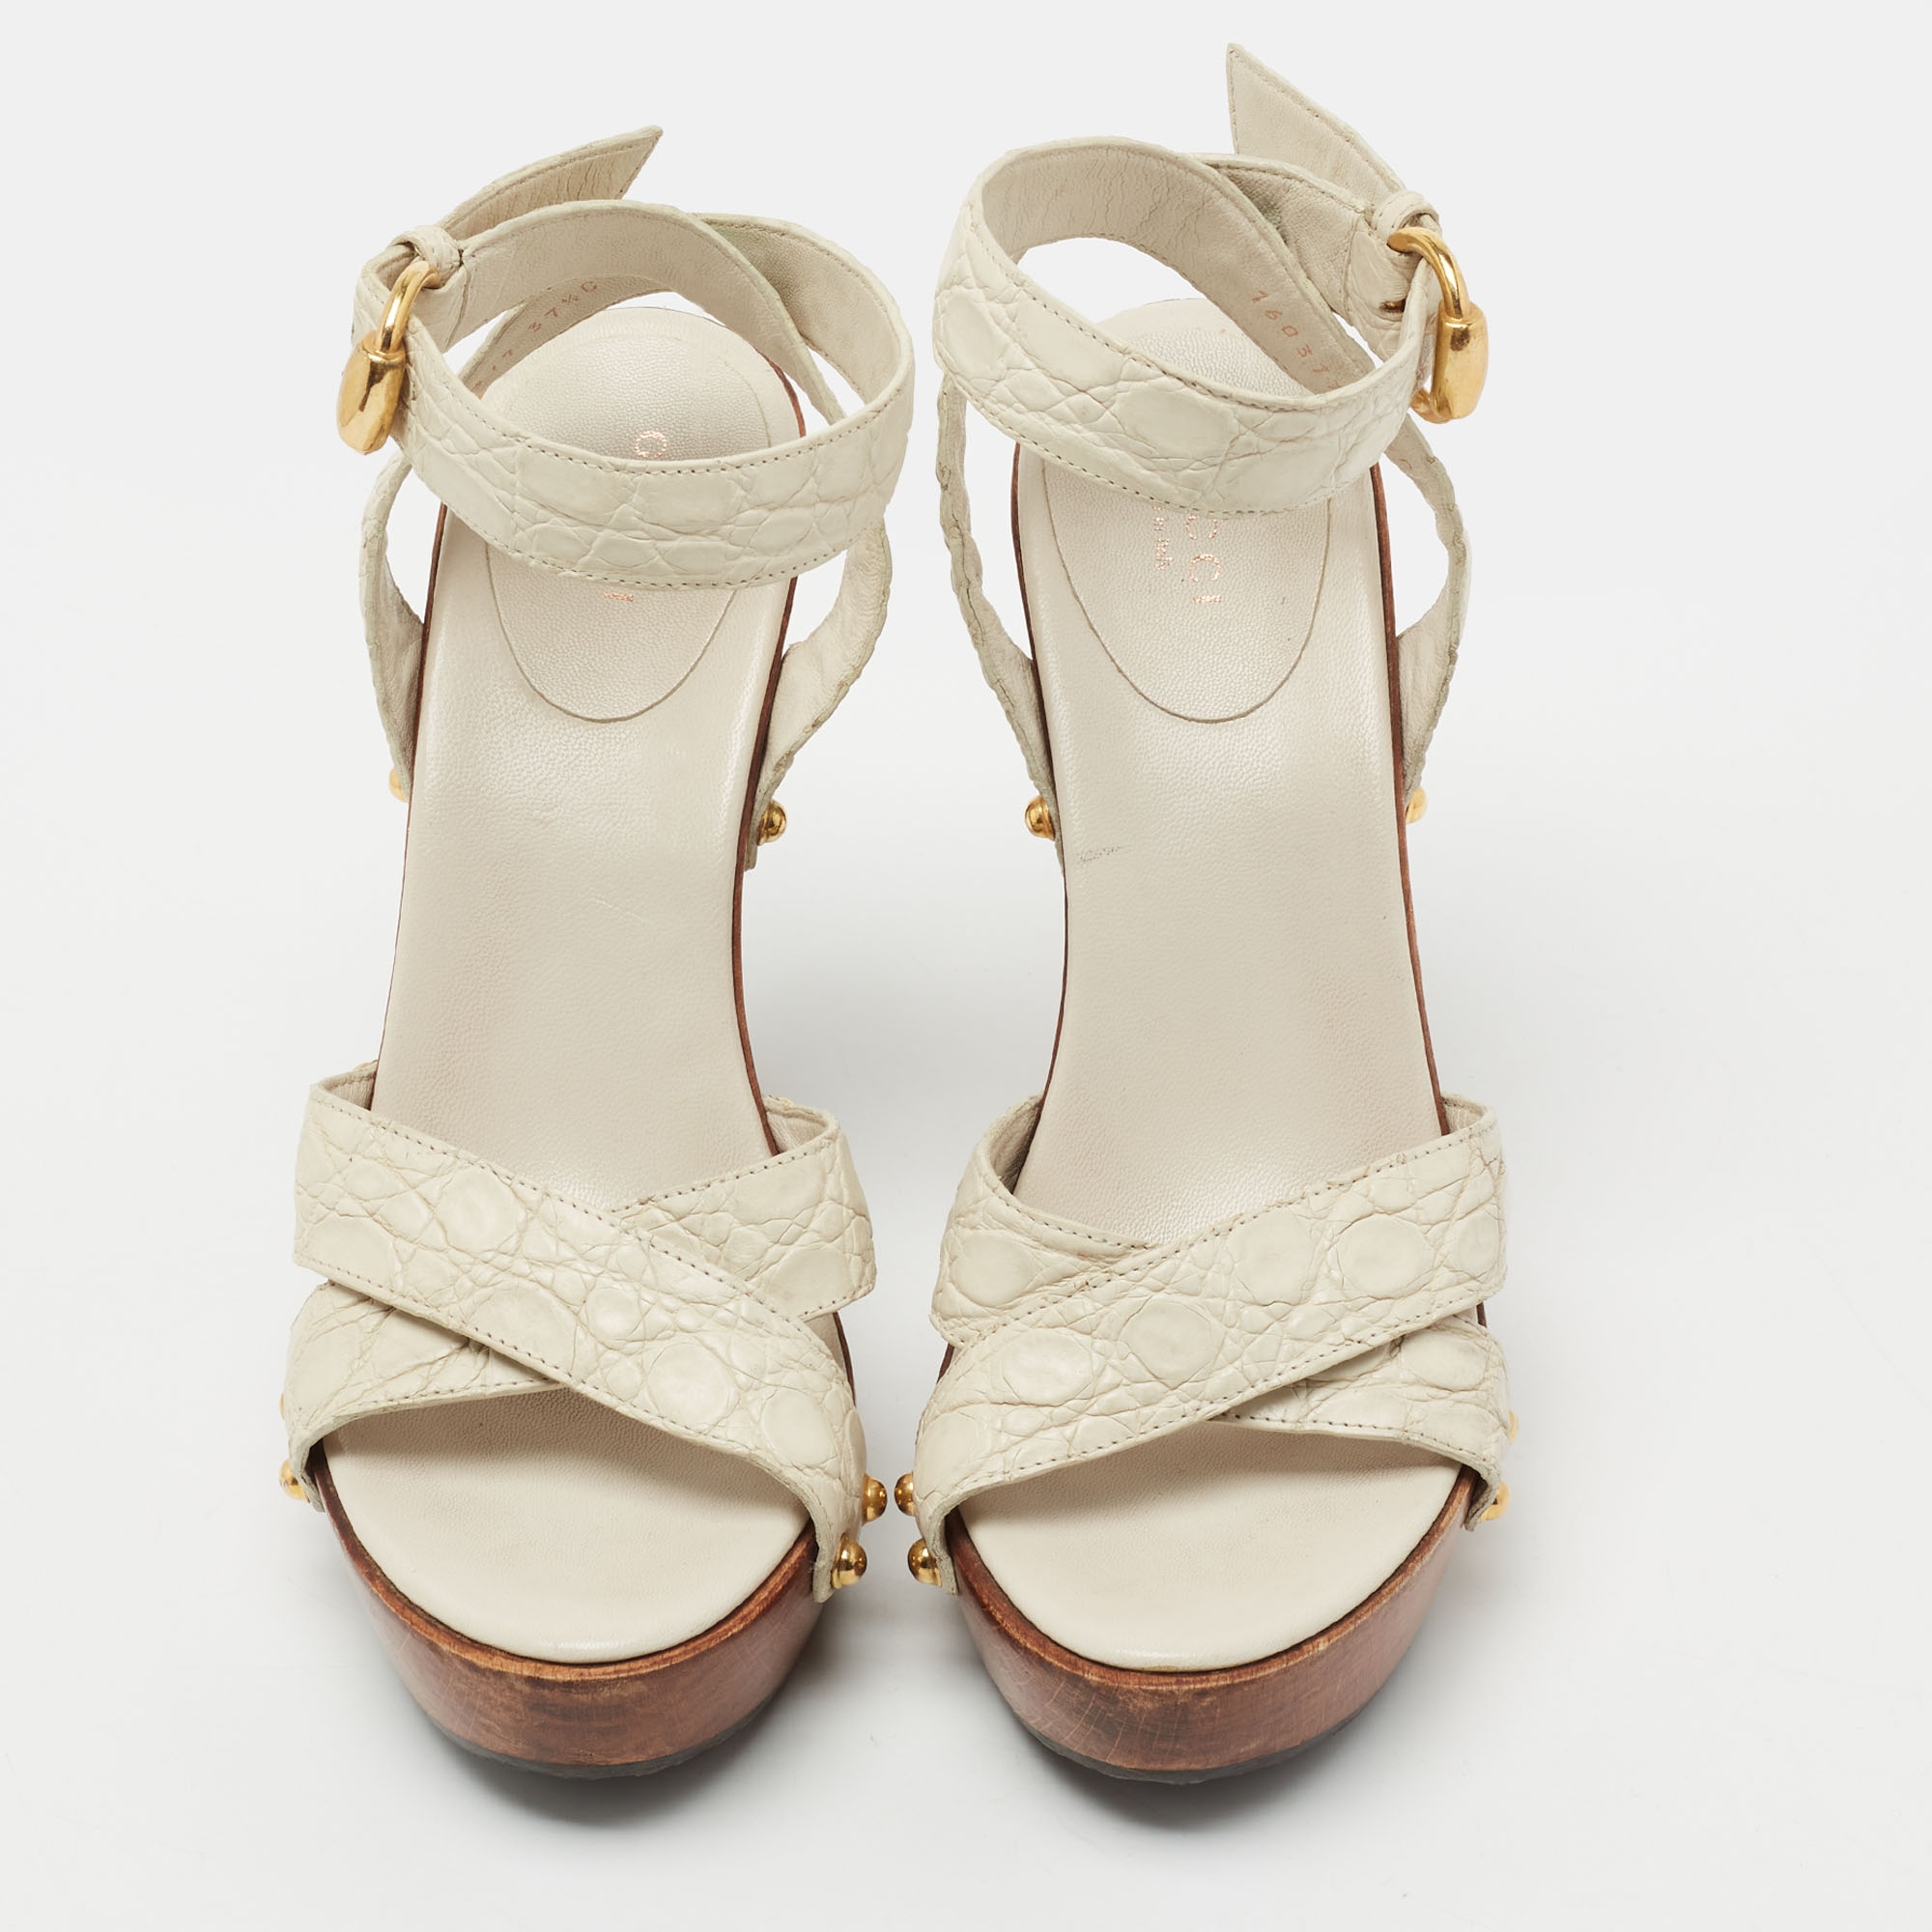 Gucci Beige Croc Embossed Leather Criss Cross Ankle Strap Platform Sandals Size 37.5